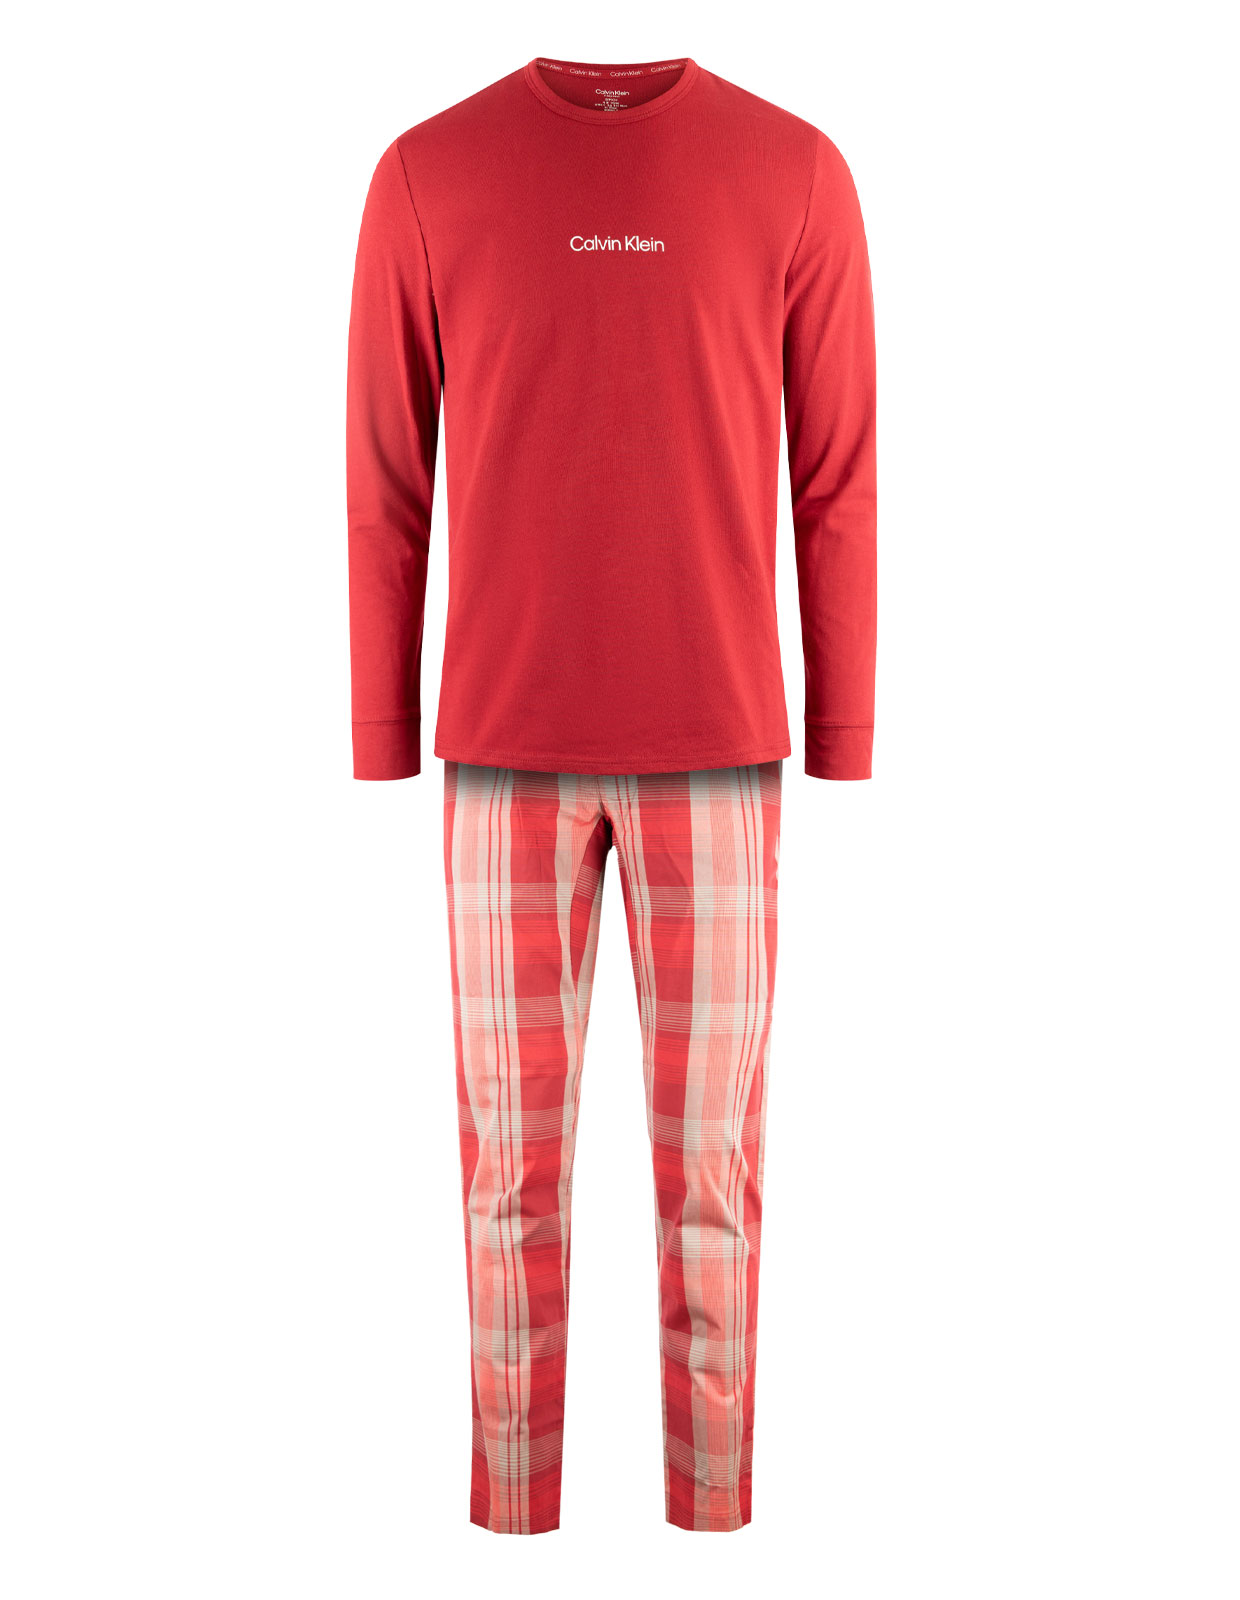 Pyjama Set Plaid Red/Grey